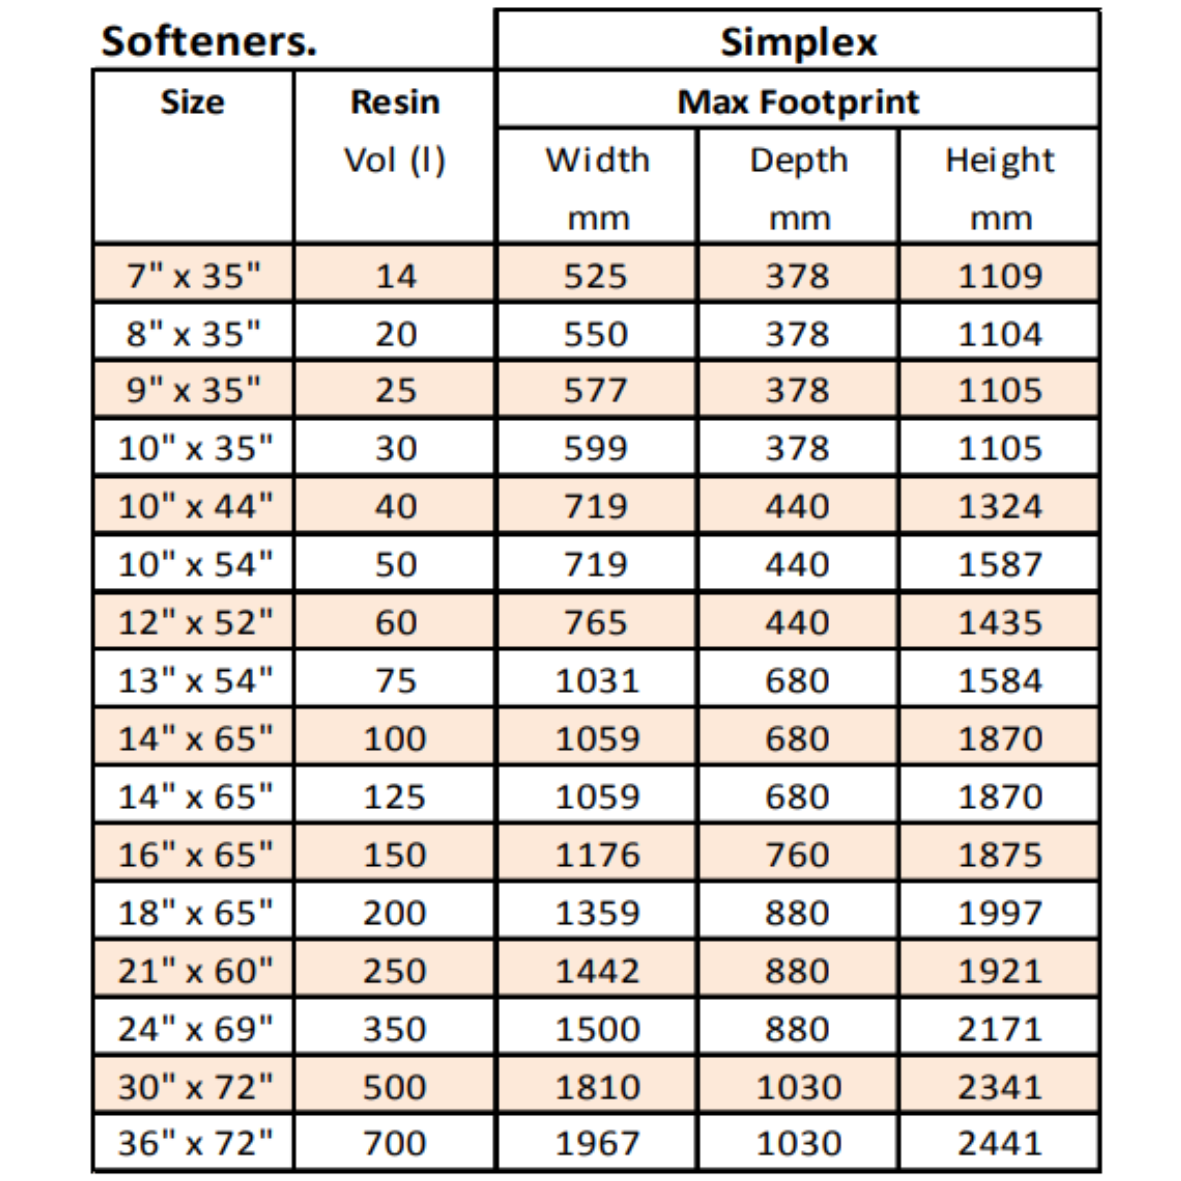 14" x 65", 100L, Simplex Water Softener, Autotrol 268 Time Controller, 4m³/hr